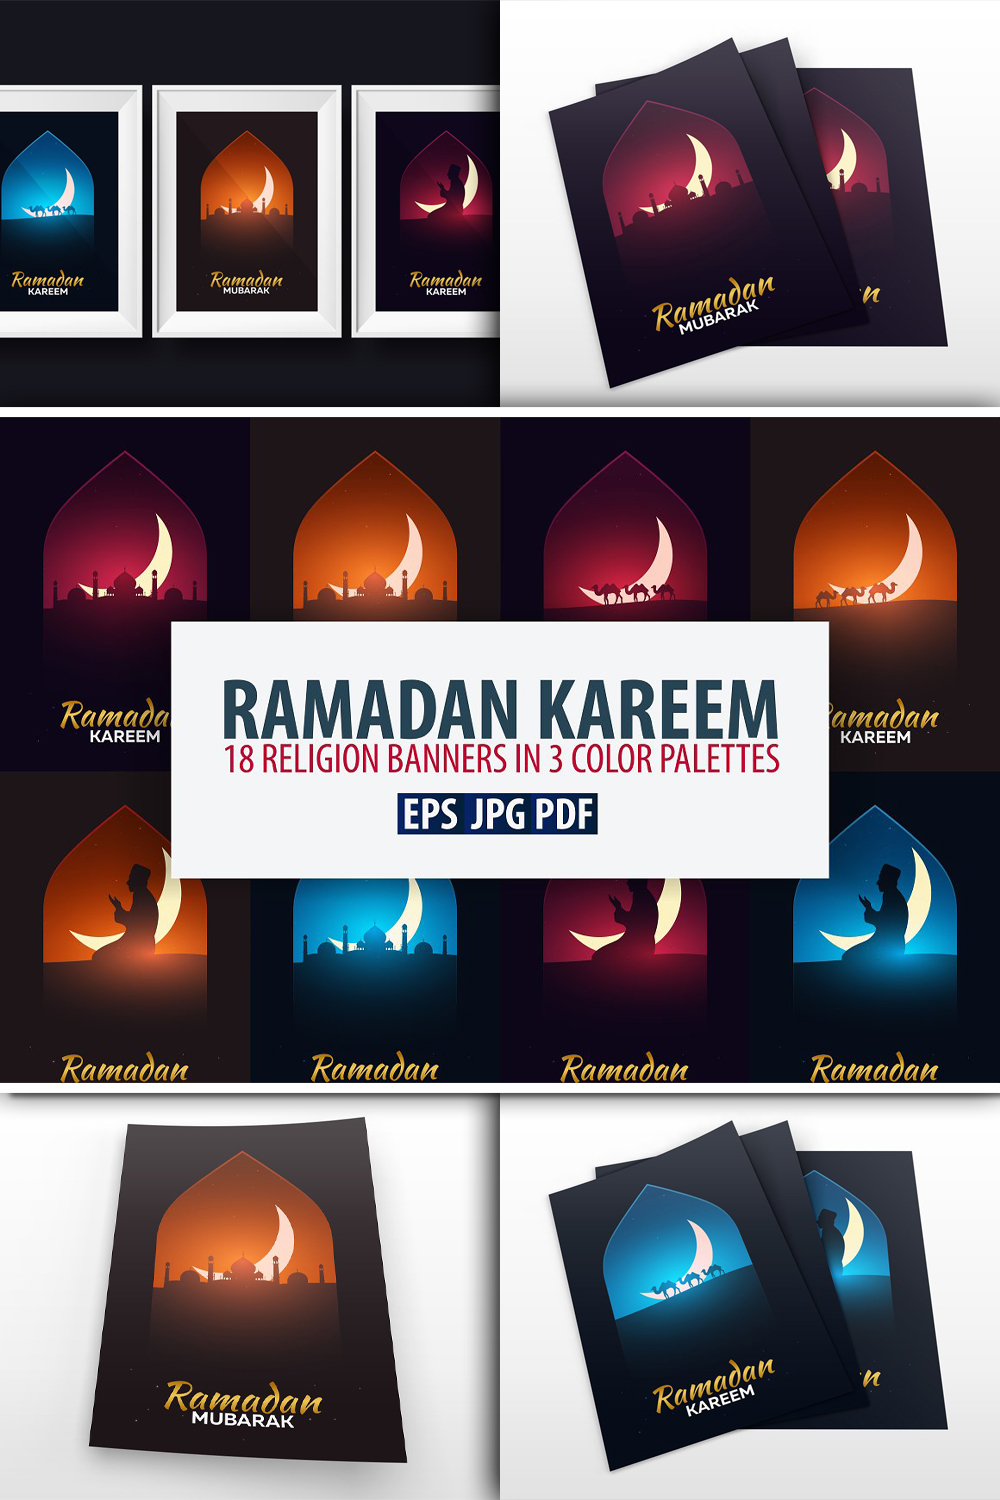 Ramadan kareem banners set of pinterest.